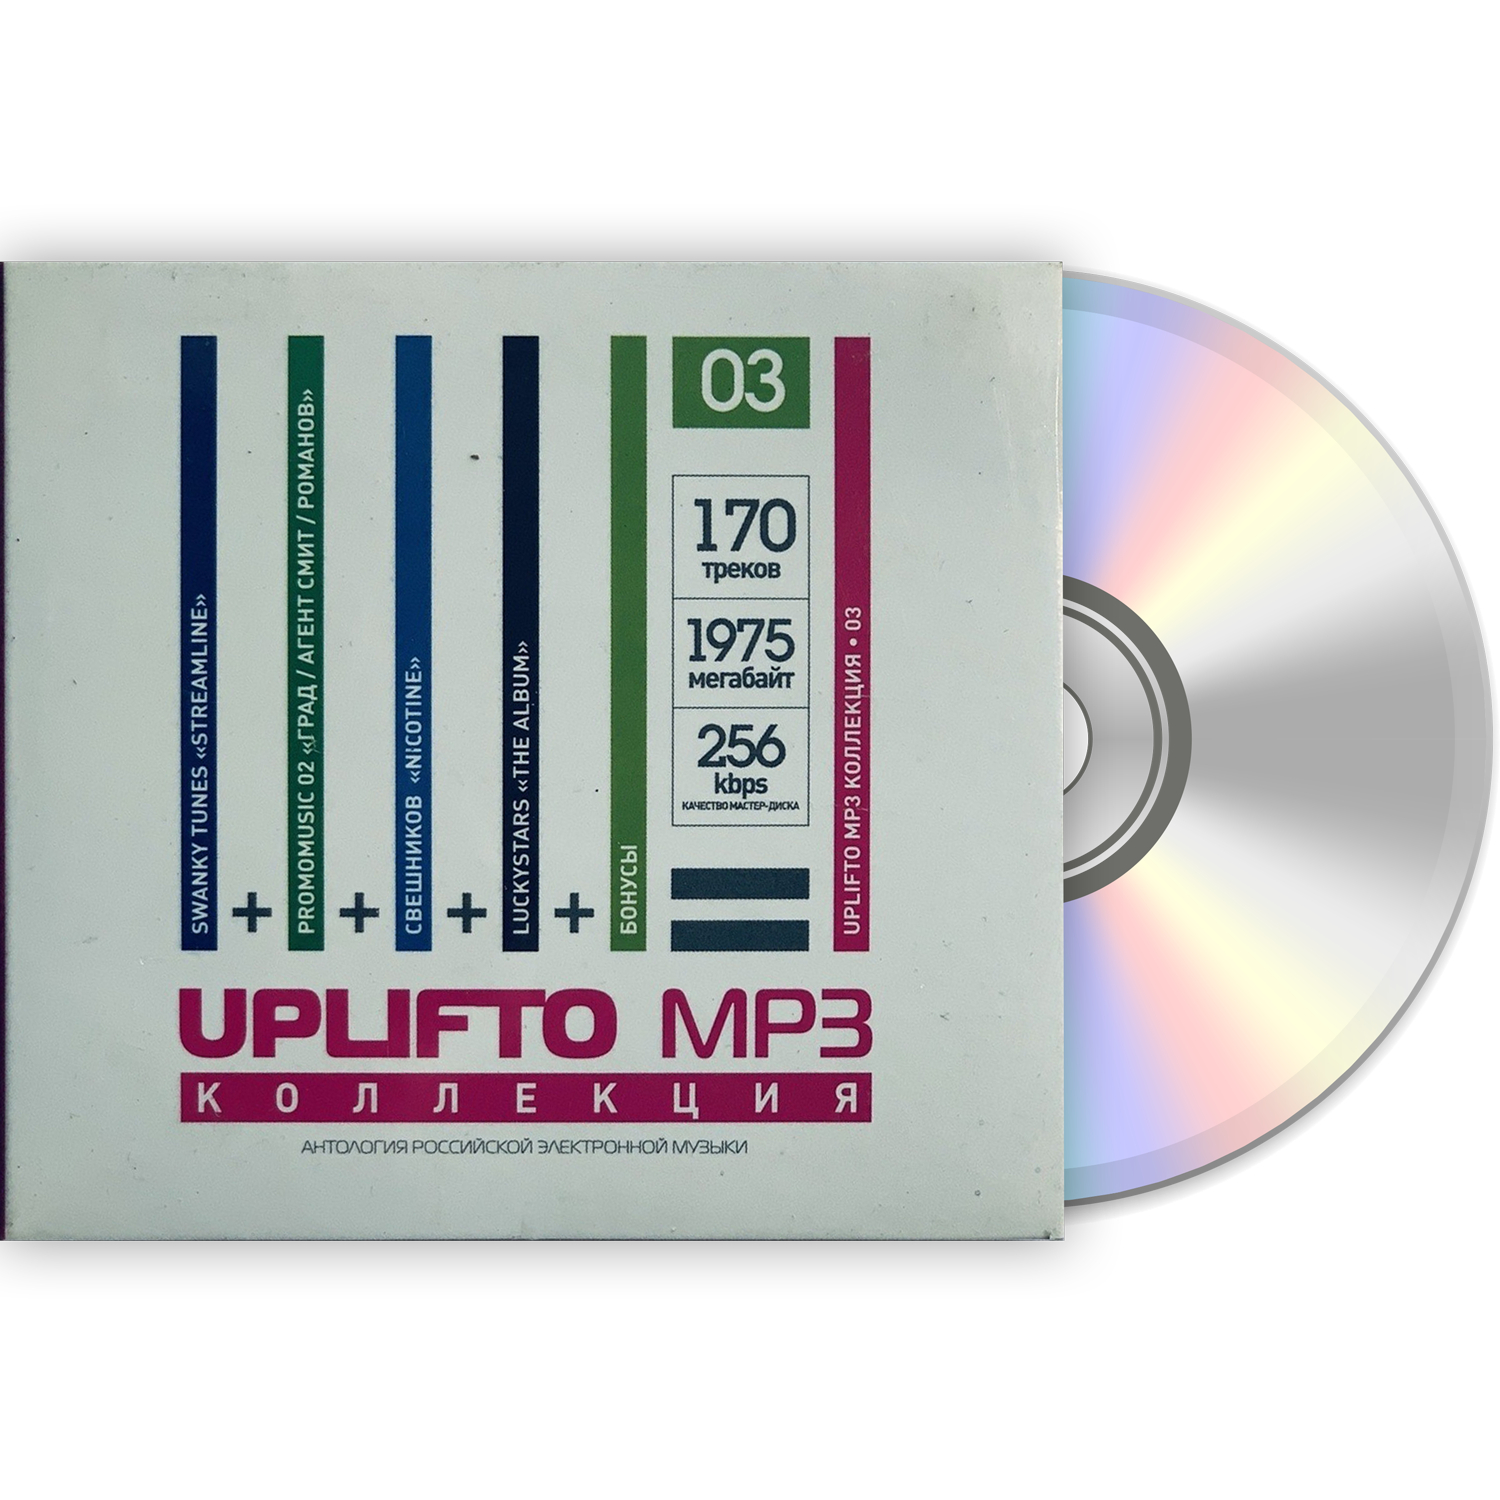 UPLIFTO Коллекция (Часть 3) MP3 CD